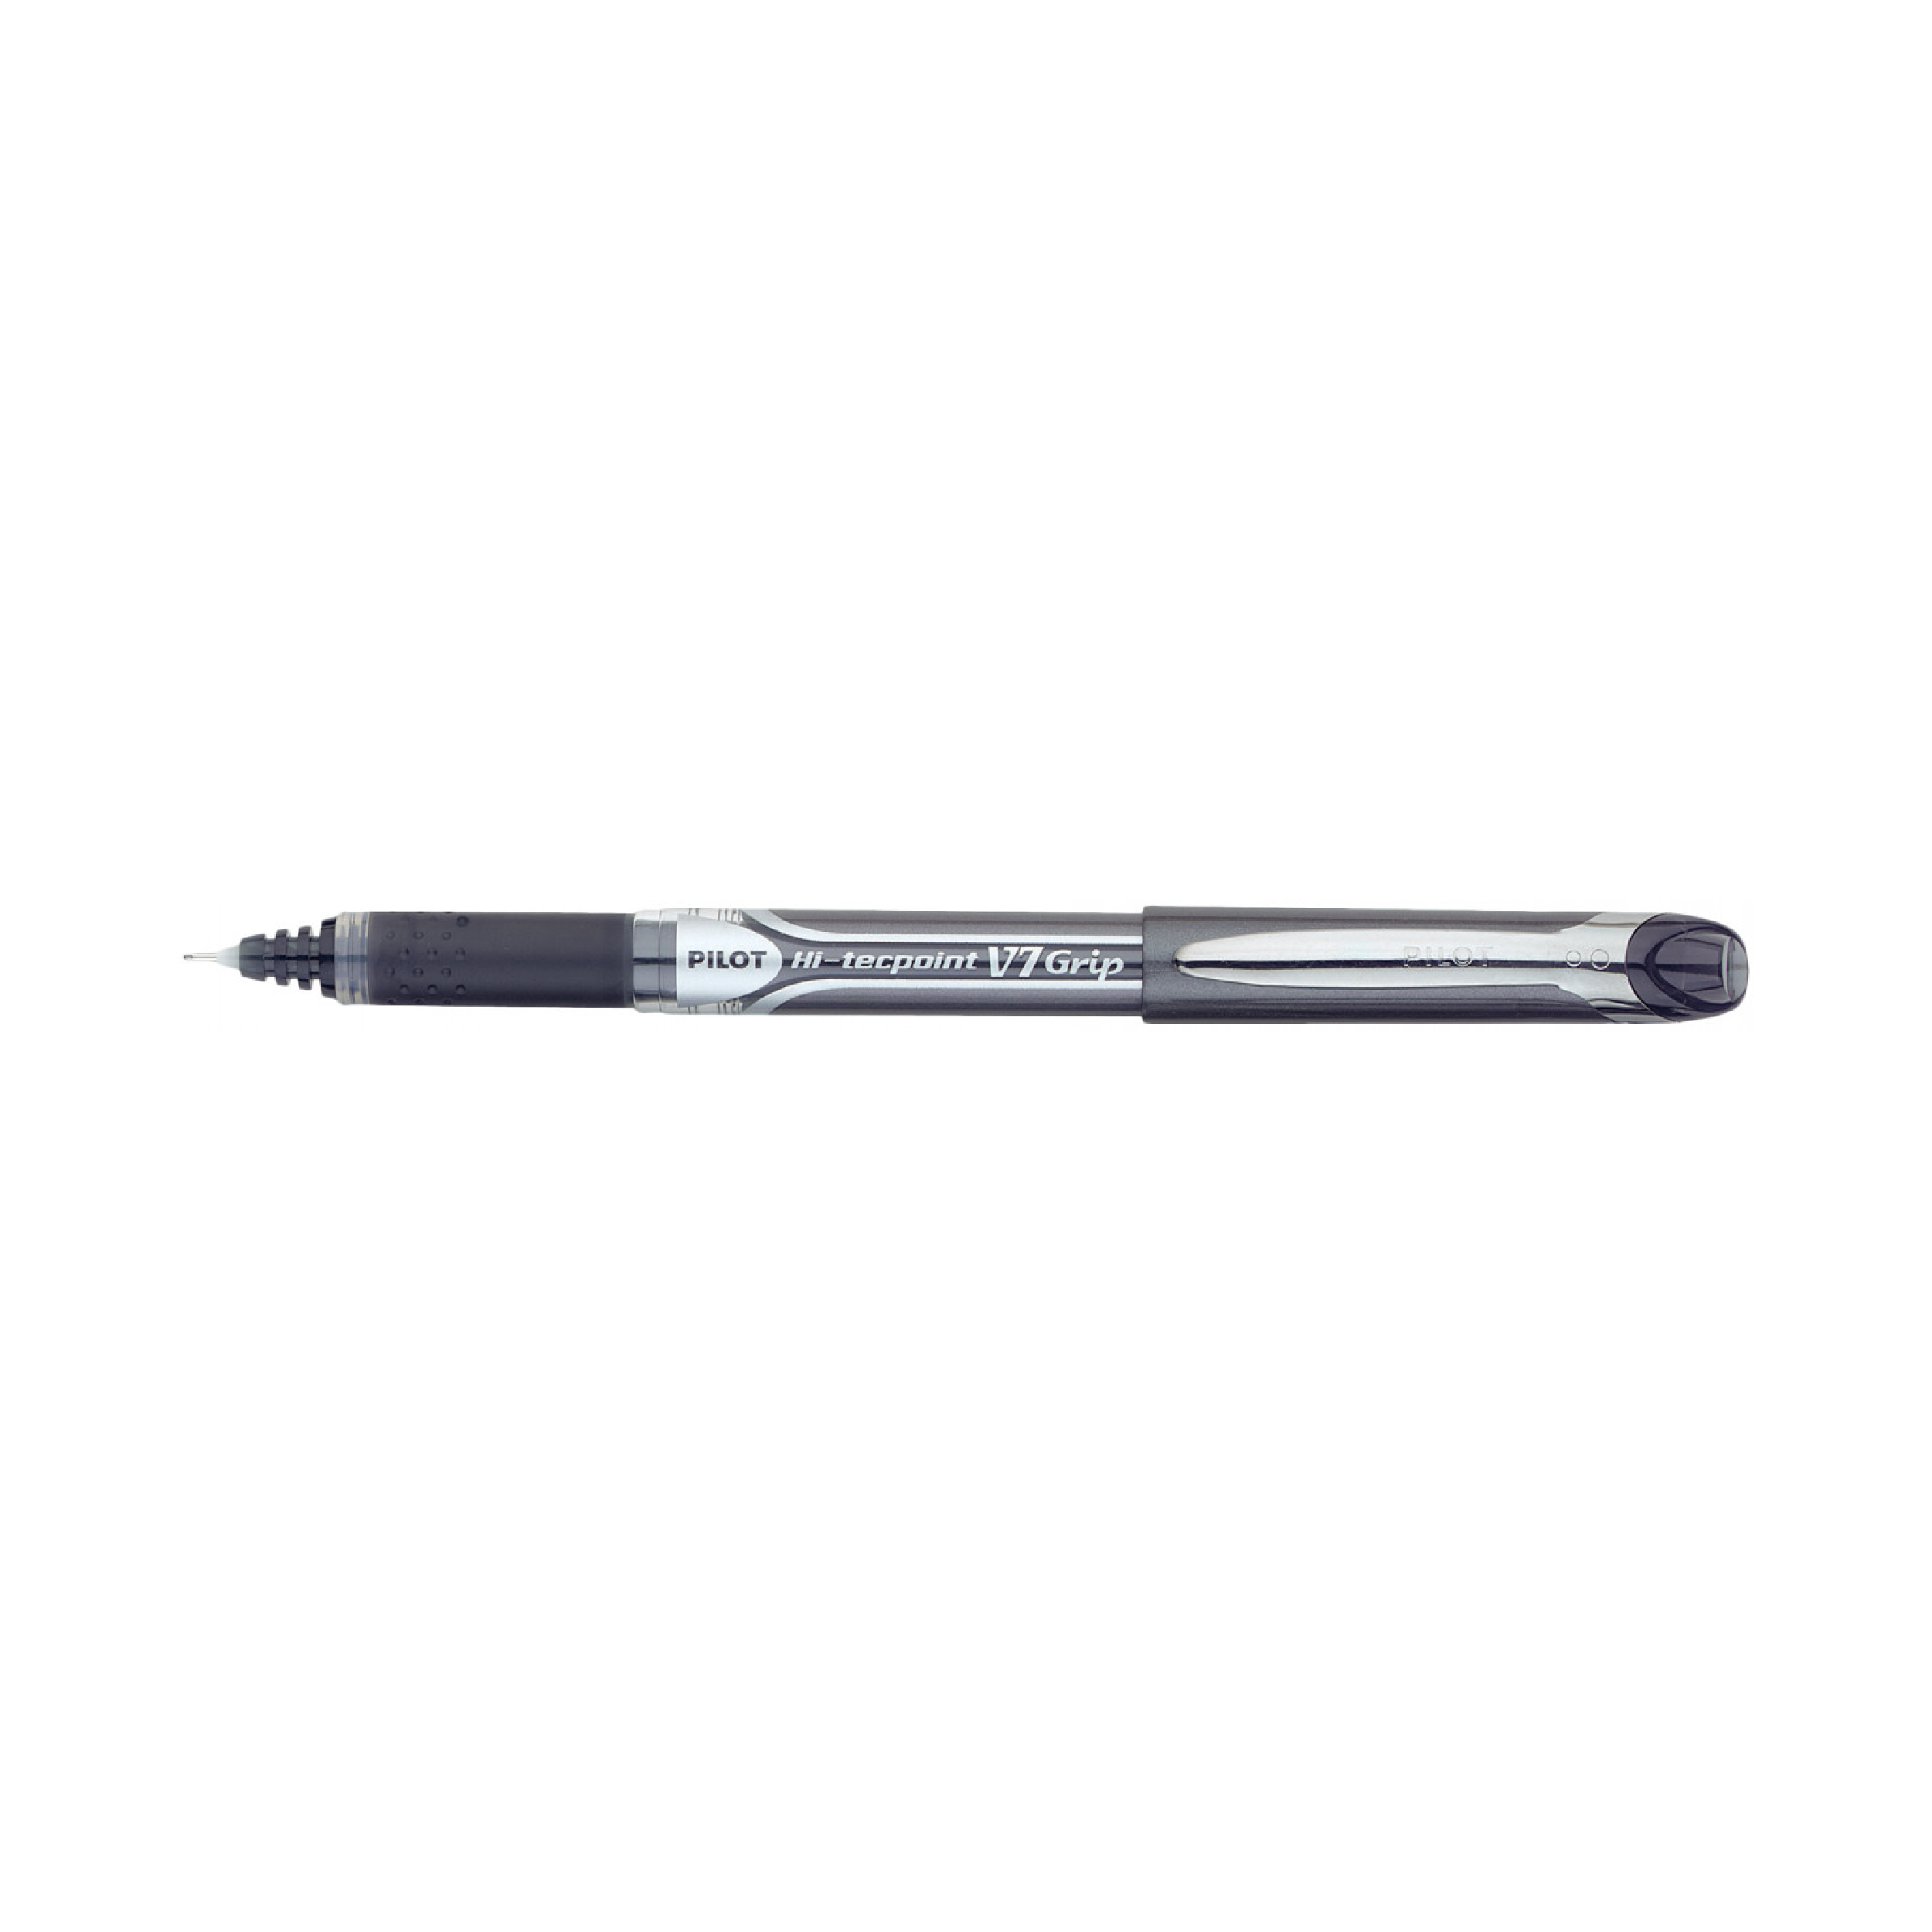 Pilot Hi-Tecpoint V7 Grip Rollerball Pen, Fine Point, 0.7mm (BXGPN-V7)